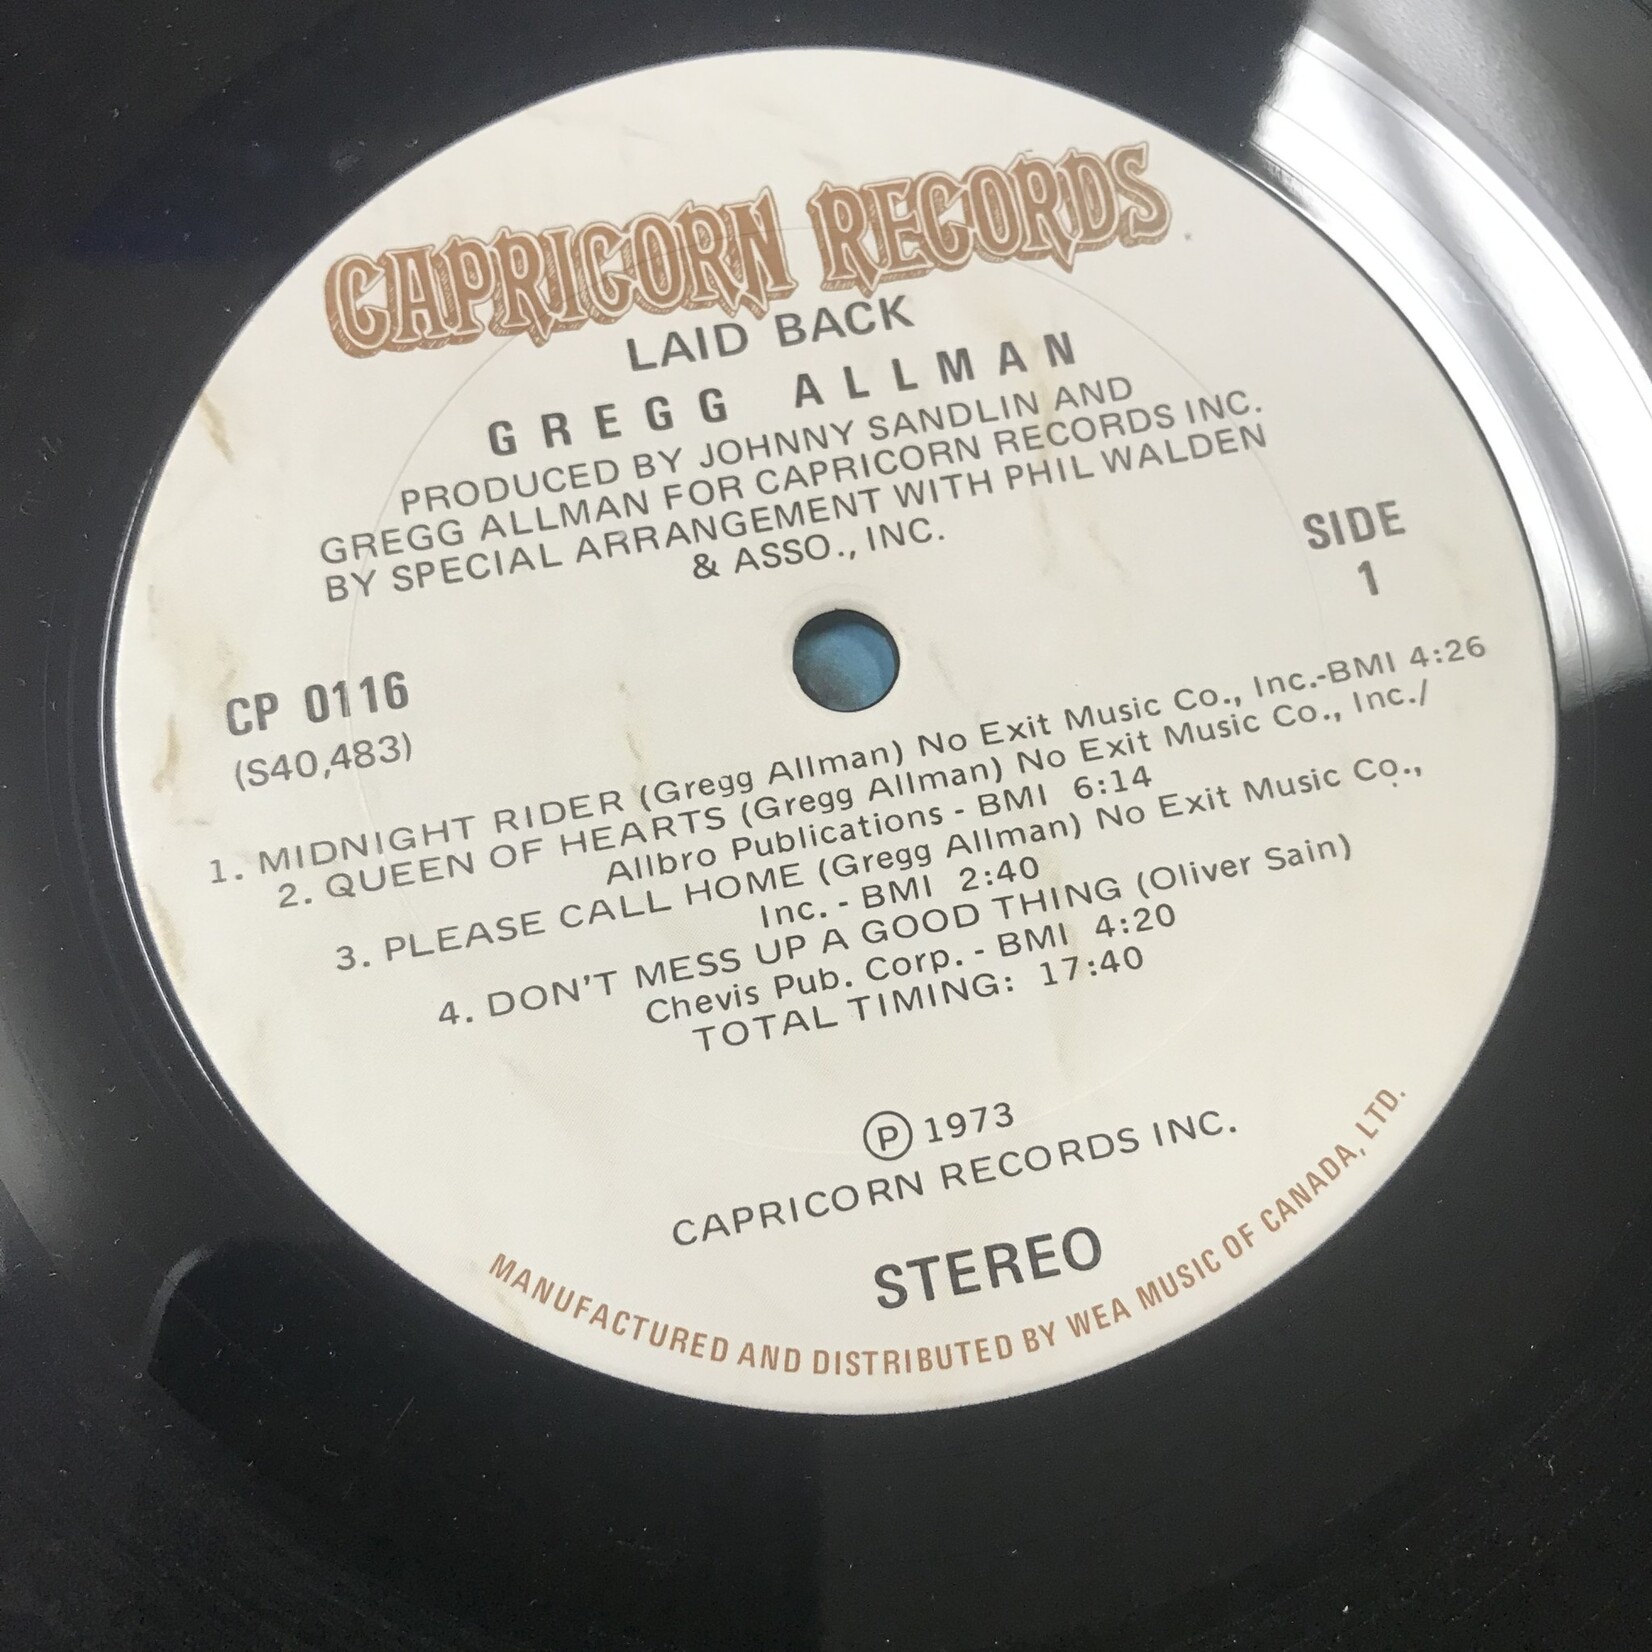 Gregg Allman - Laid Back - Vinyl LP (USED)